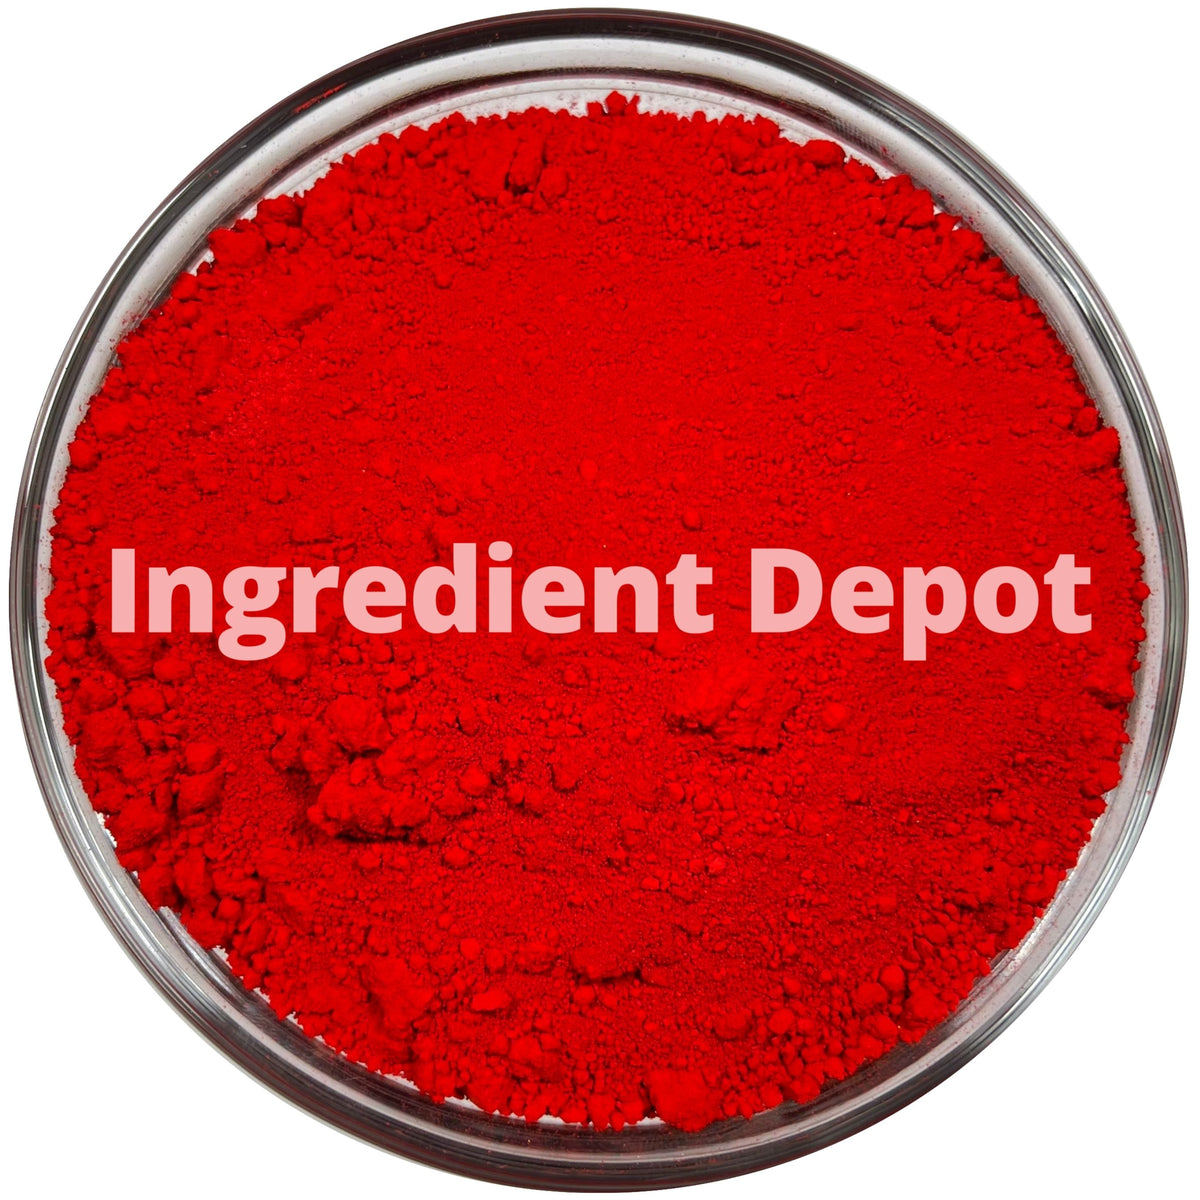 Red No. 40 FD&amp;C Aluminum Lake Dark (36-42%) Allura Red 1 lb (454g) Raw Material